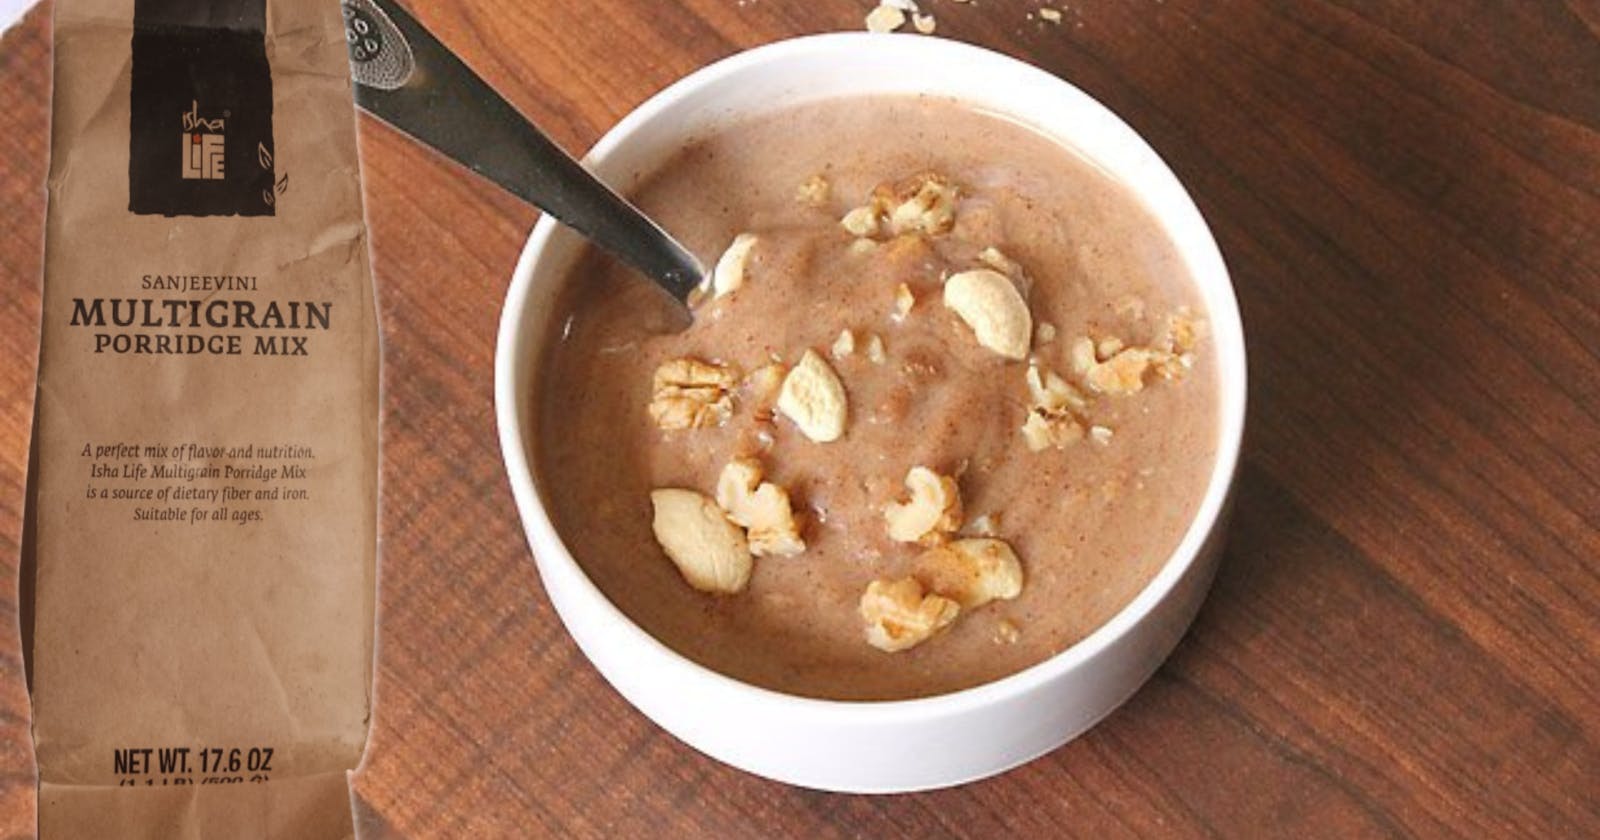 Sanjeevini: Multigrain Porridge Mix